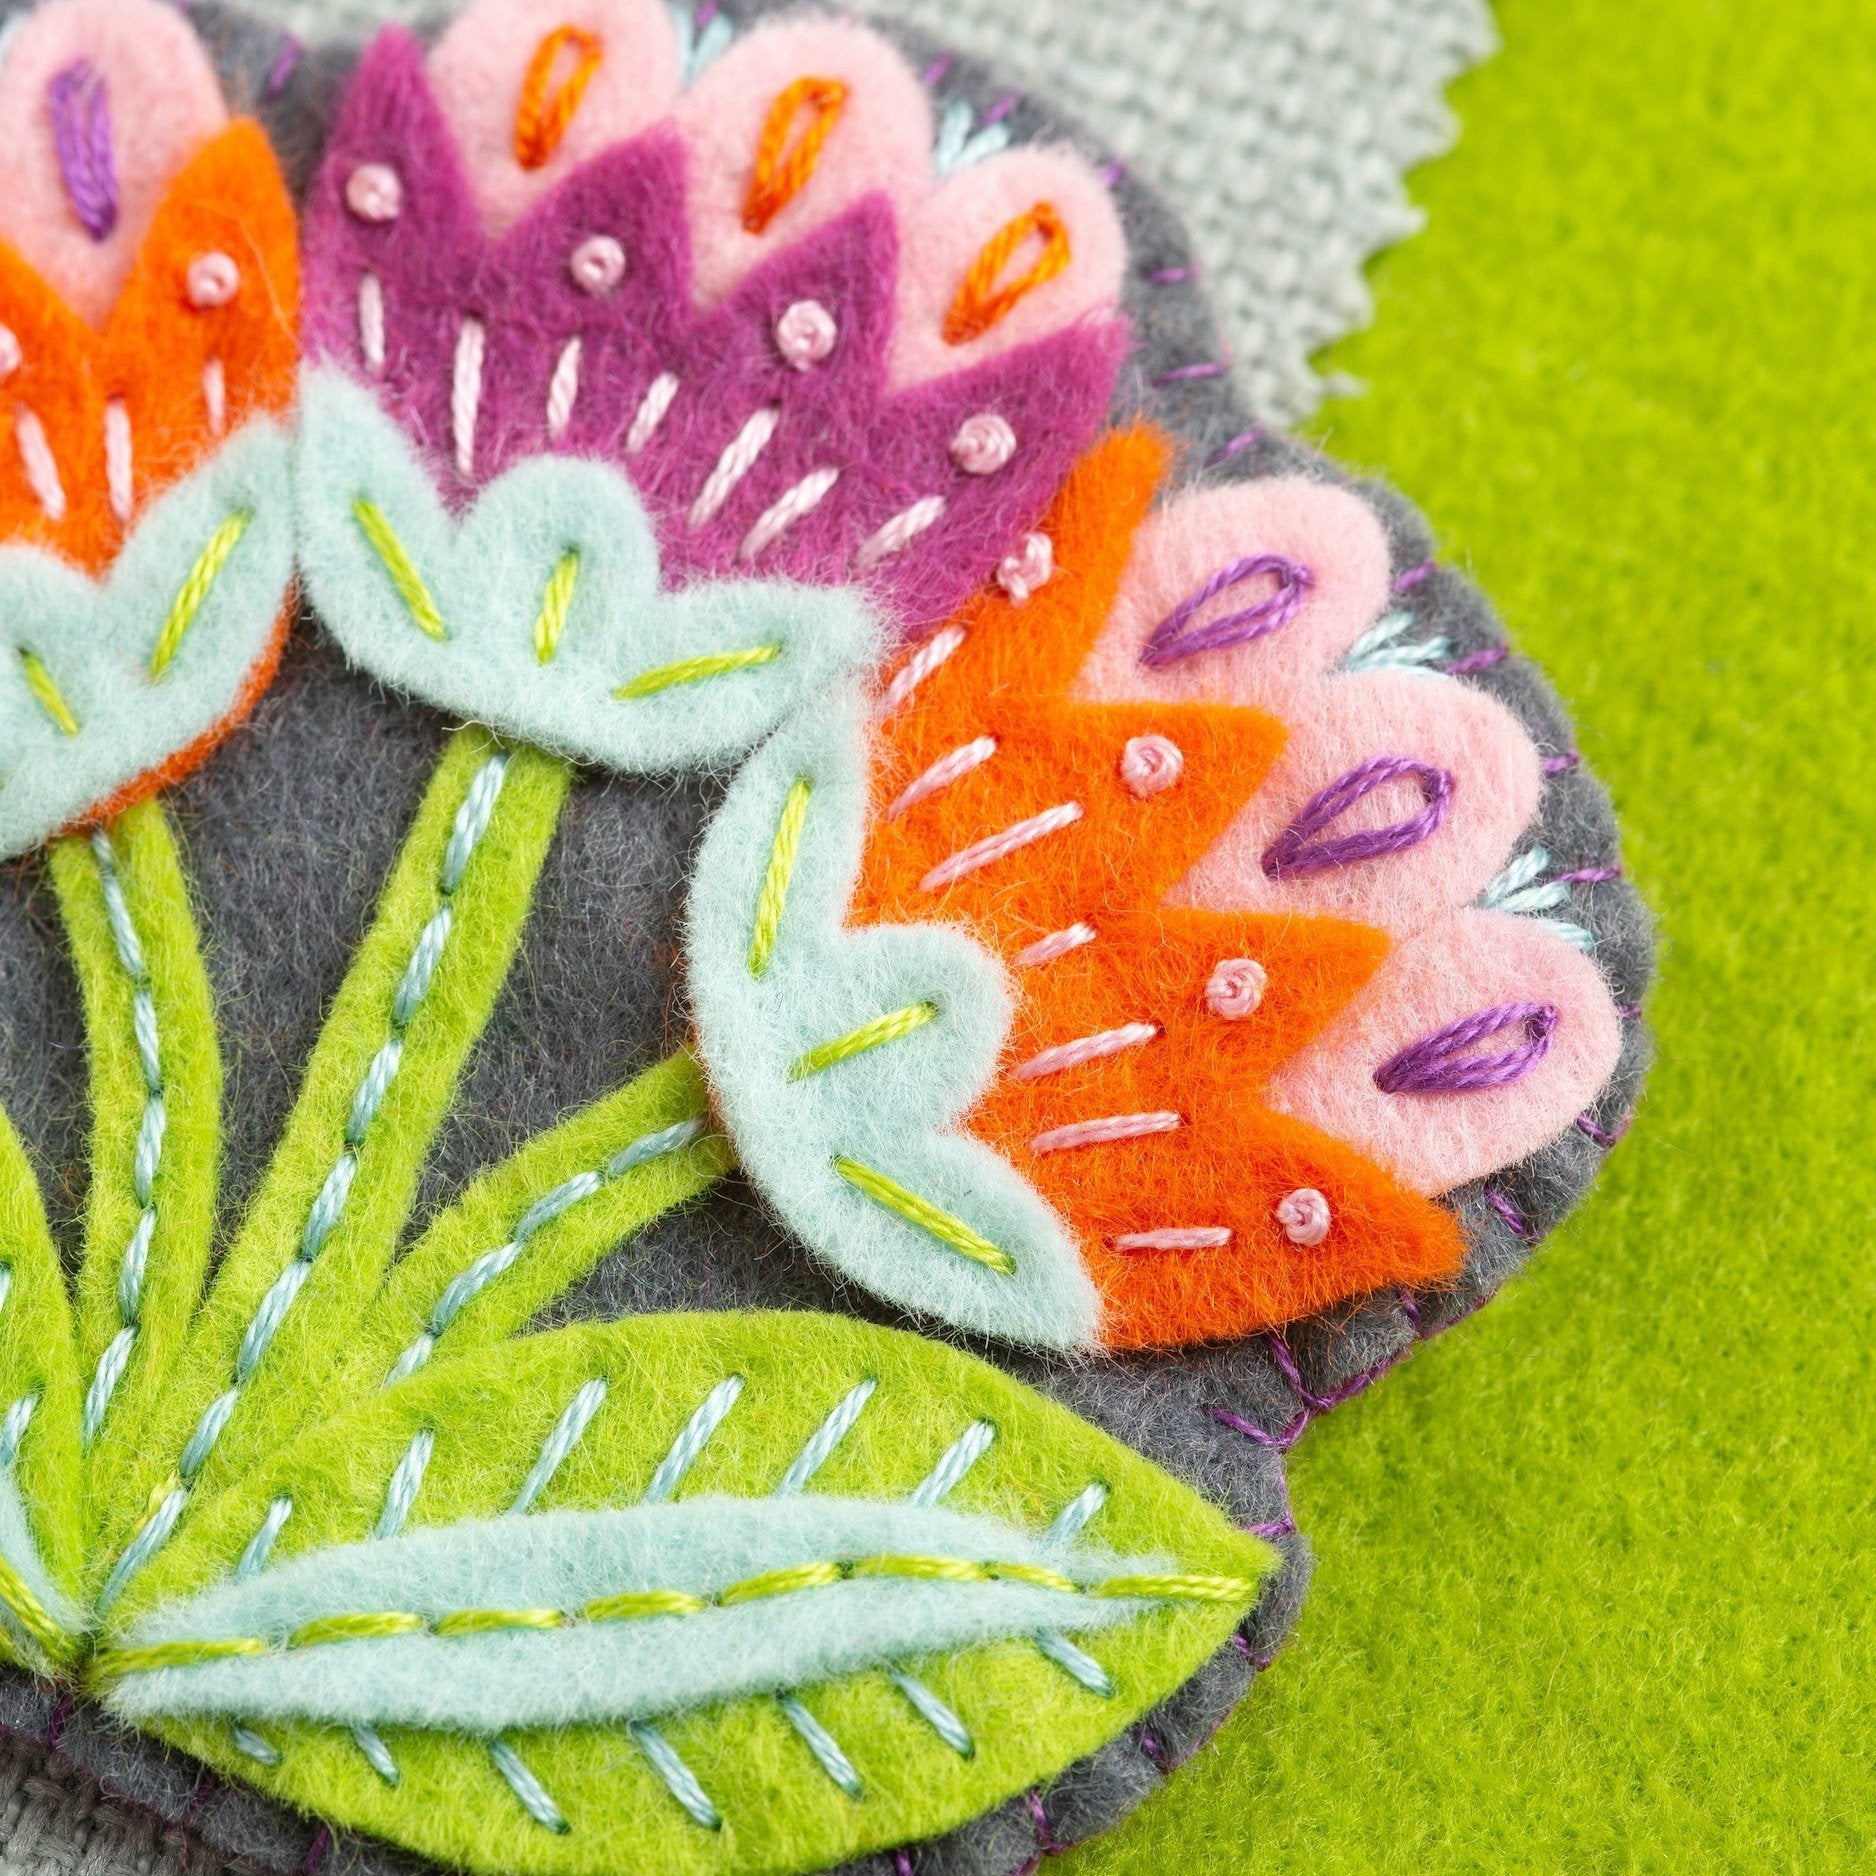 Close up image of Marianne flower brooch on green felt background.